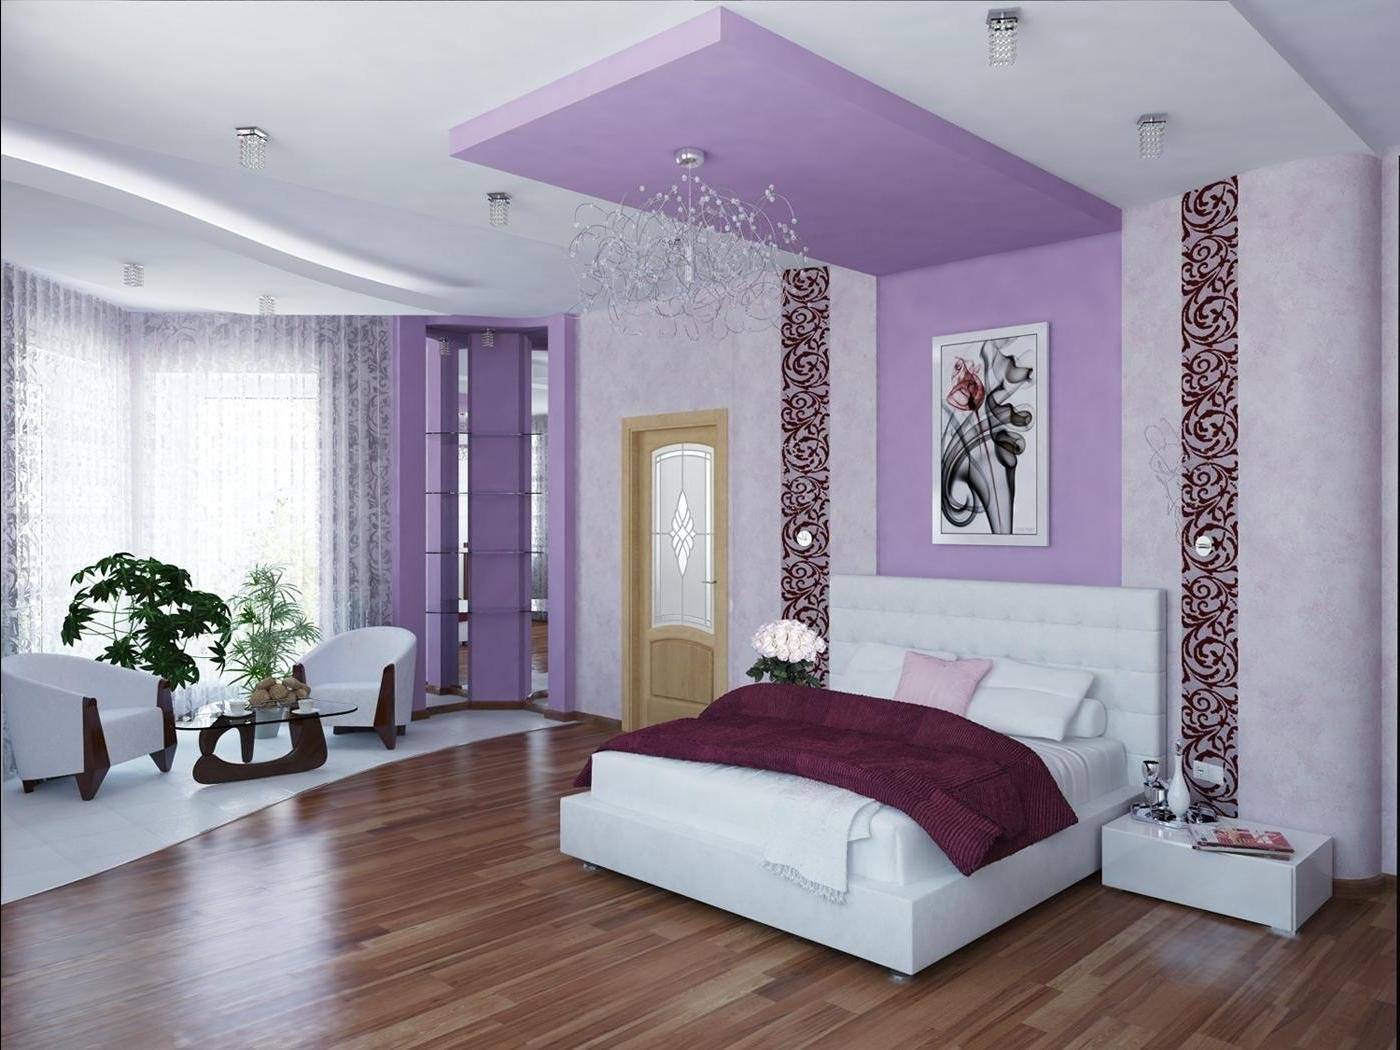 дизайн комнаты в двух цветах фото